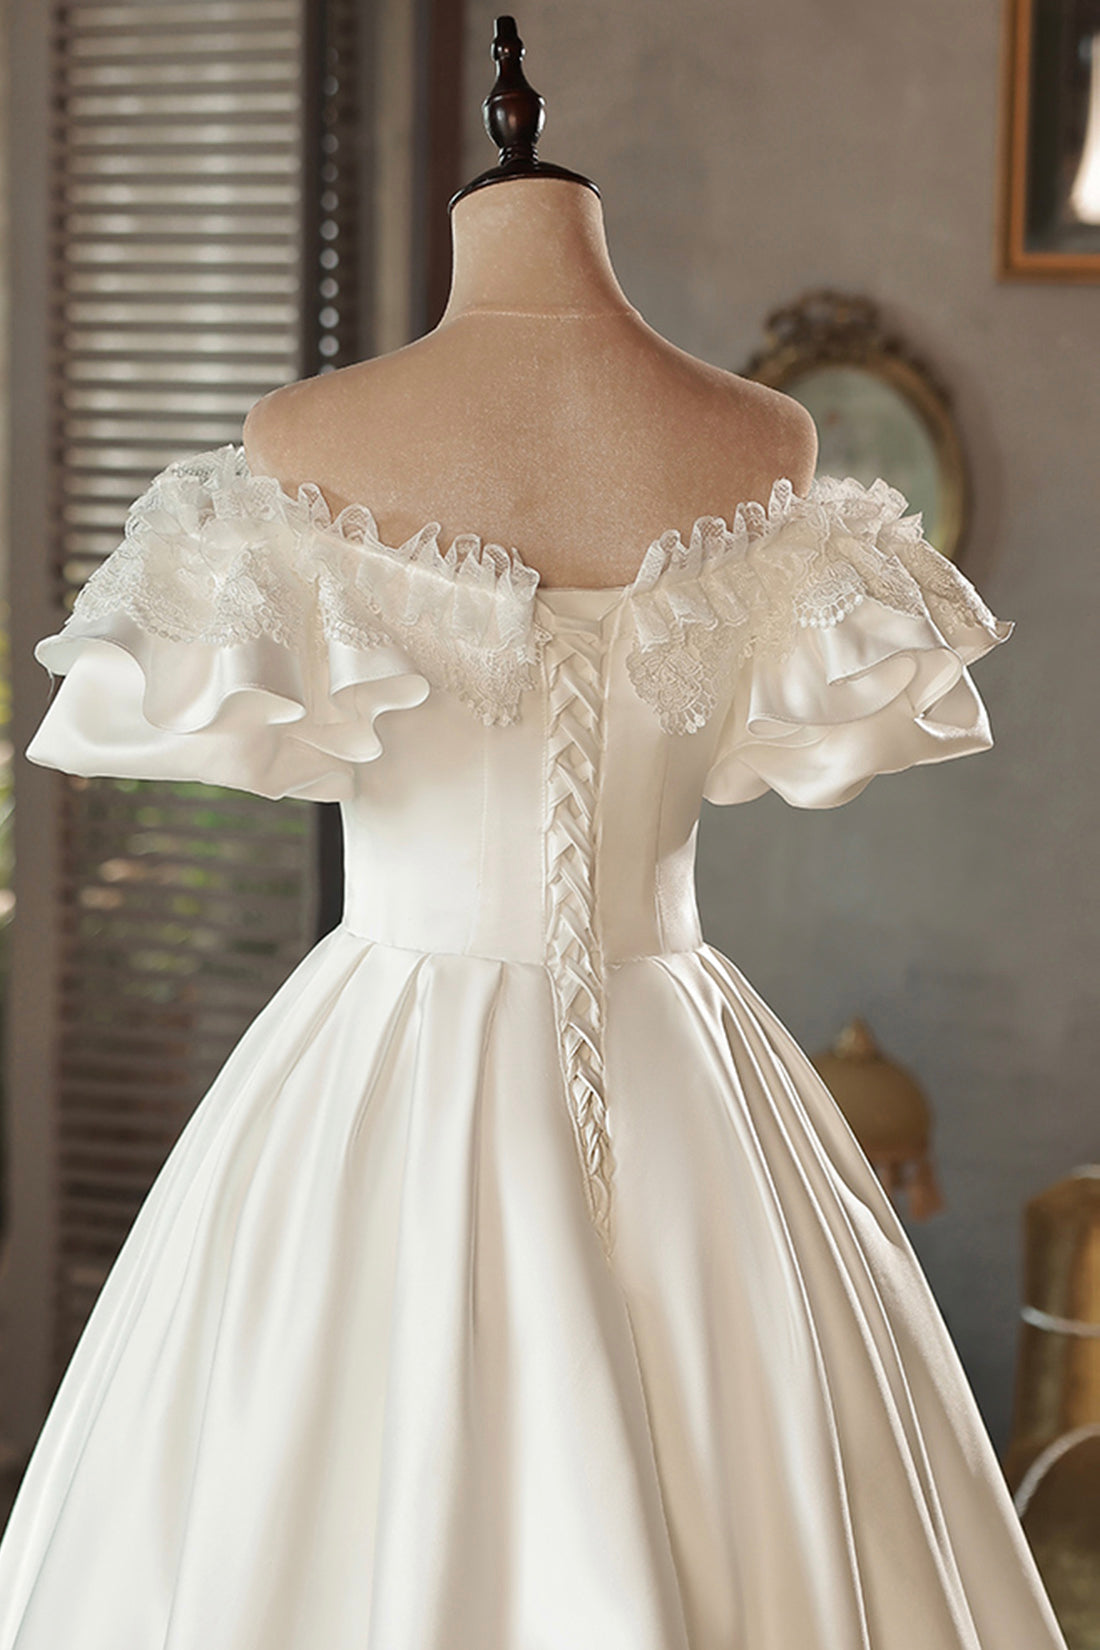 Wedding Dress Vintage, White Satin Lace Off Shoulder Prom Dress, White Evening Dress, Wedding Dress